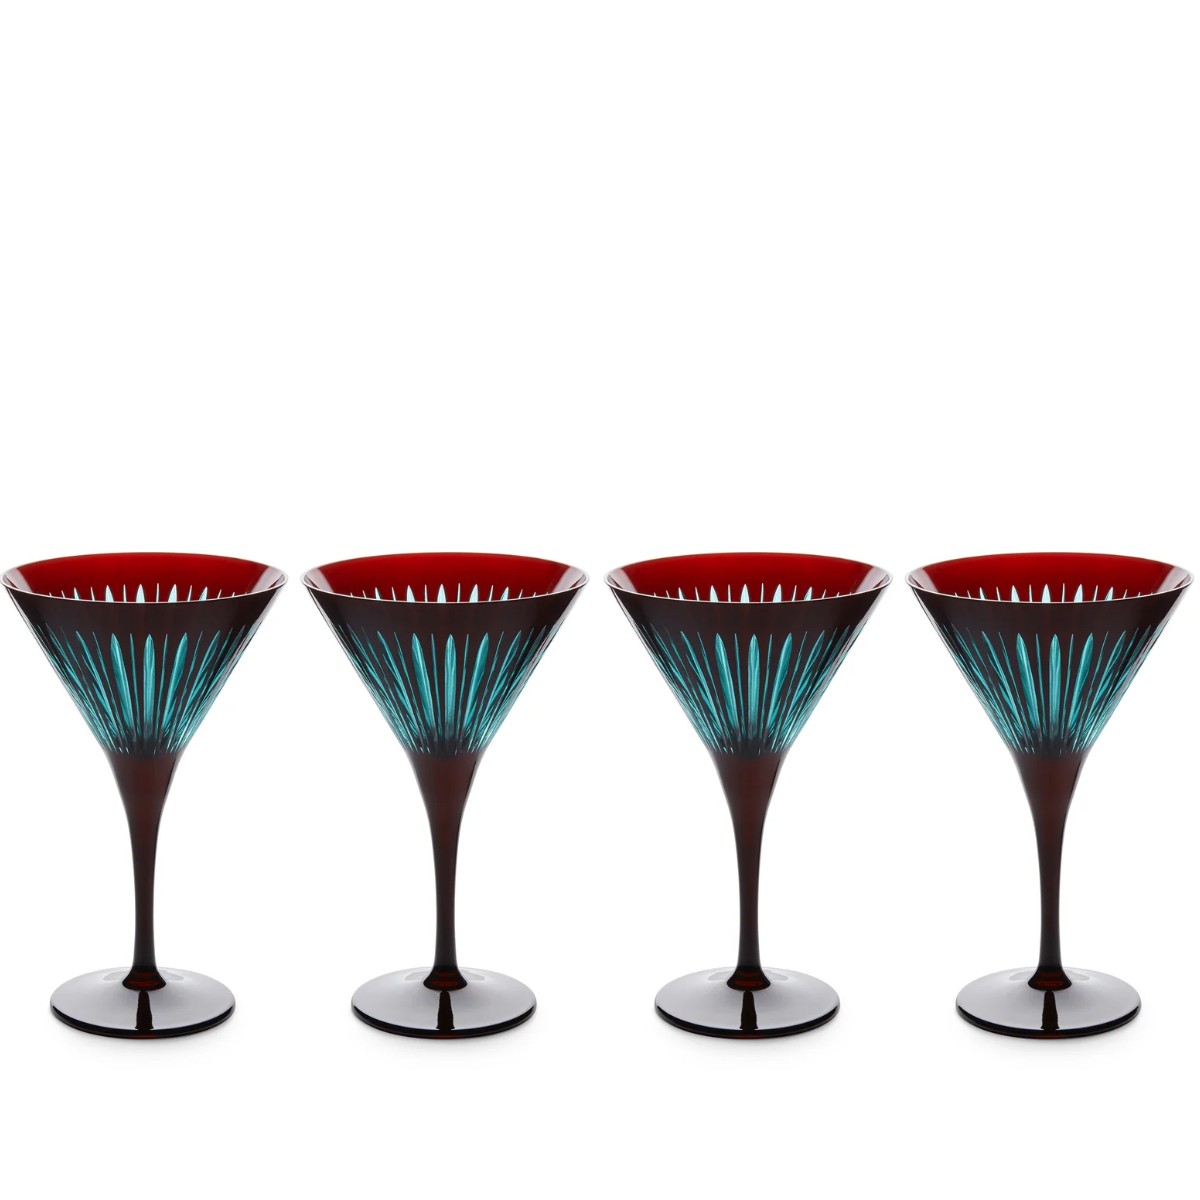 L’Objet | Prism Martini Glasses Set of 4 | Bordeaux